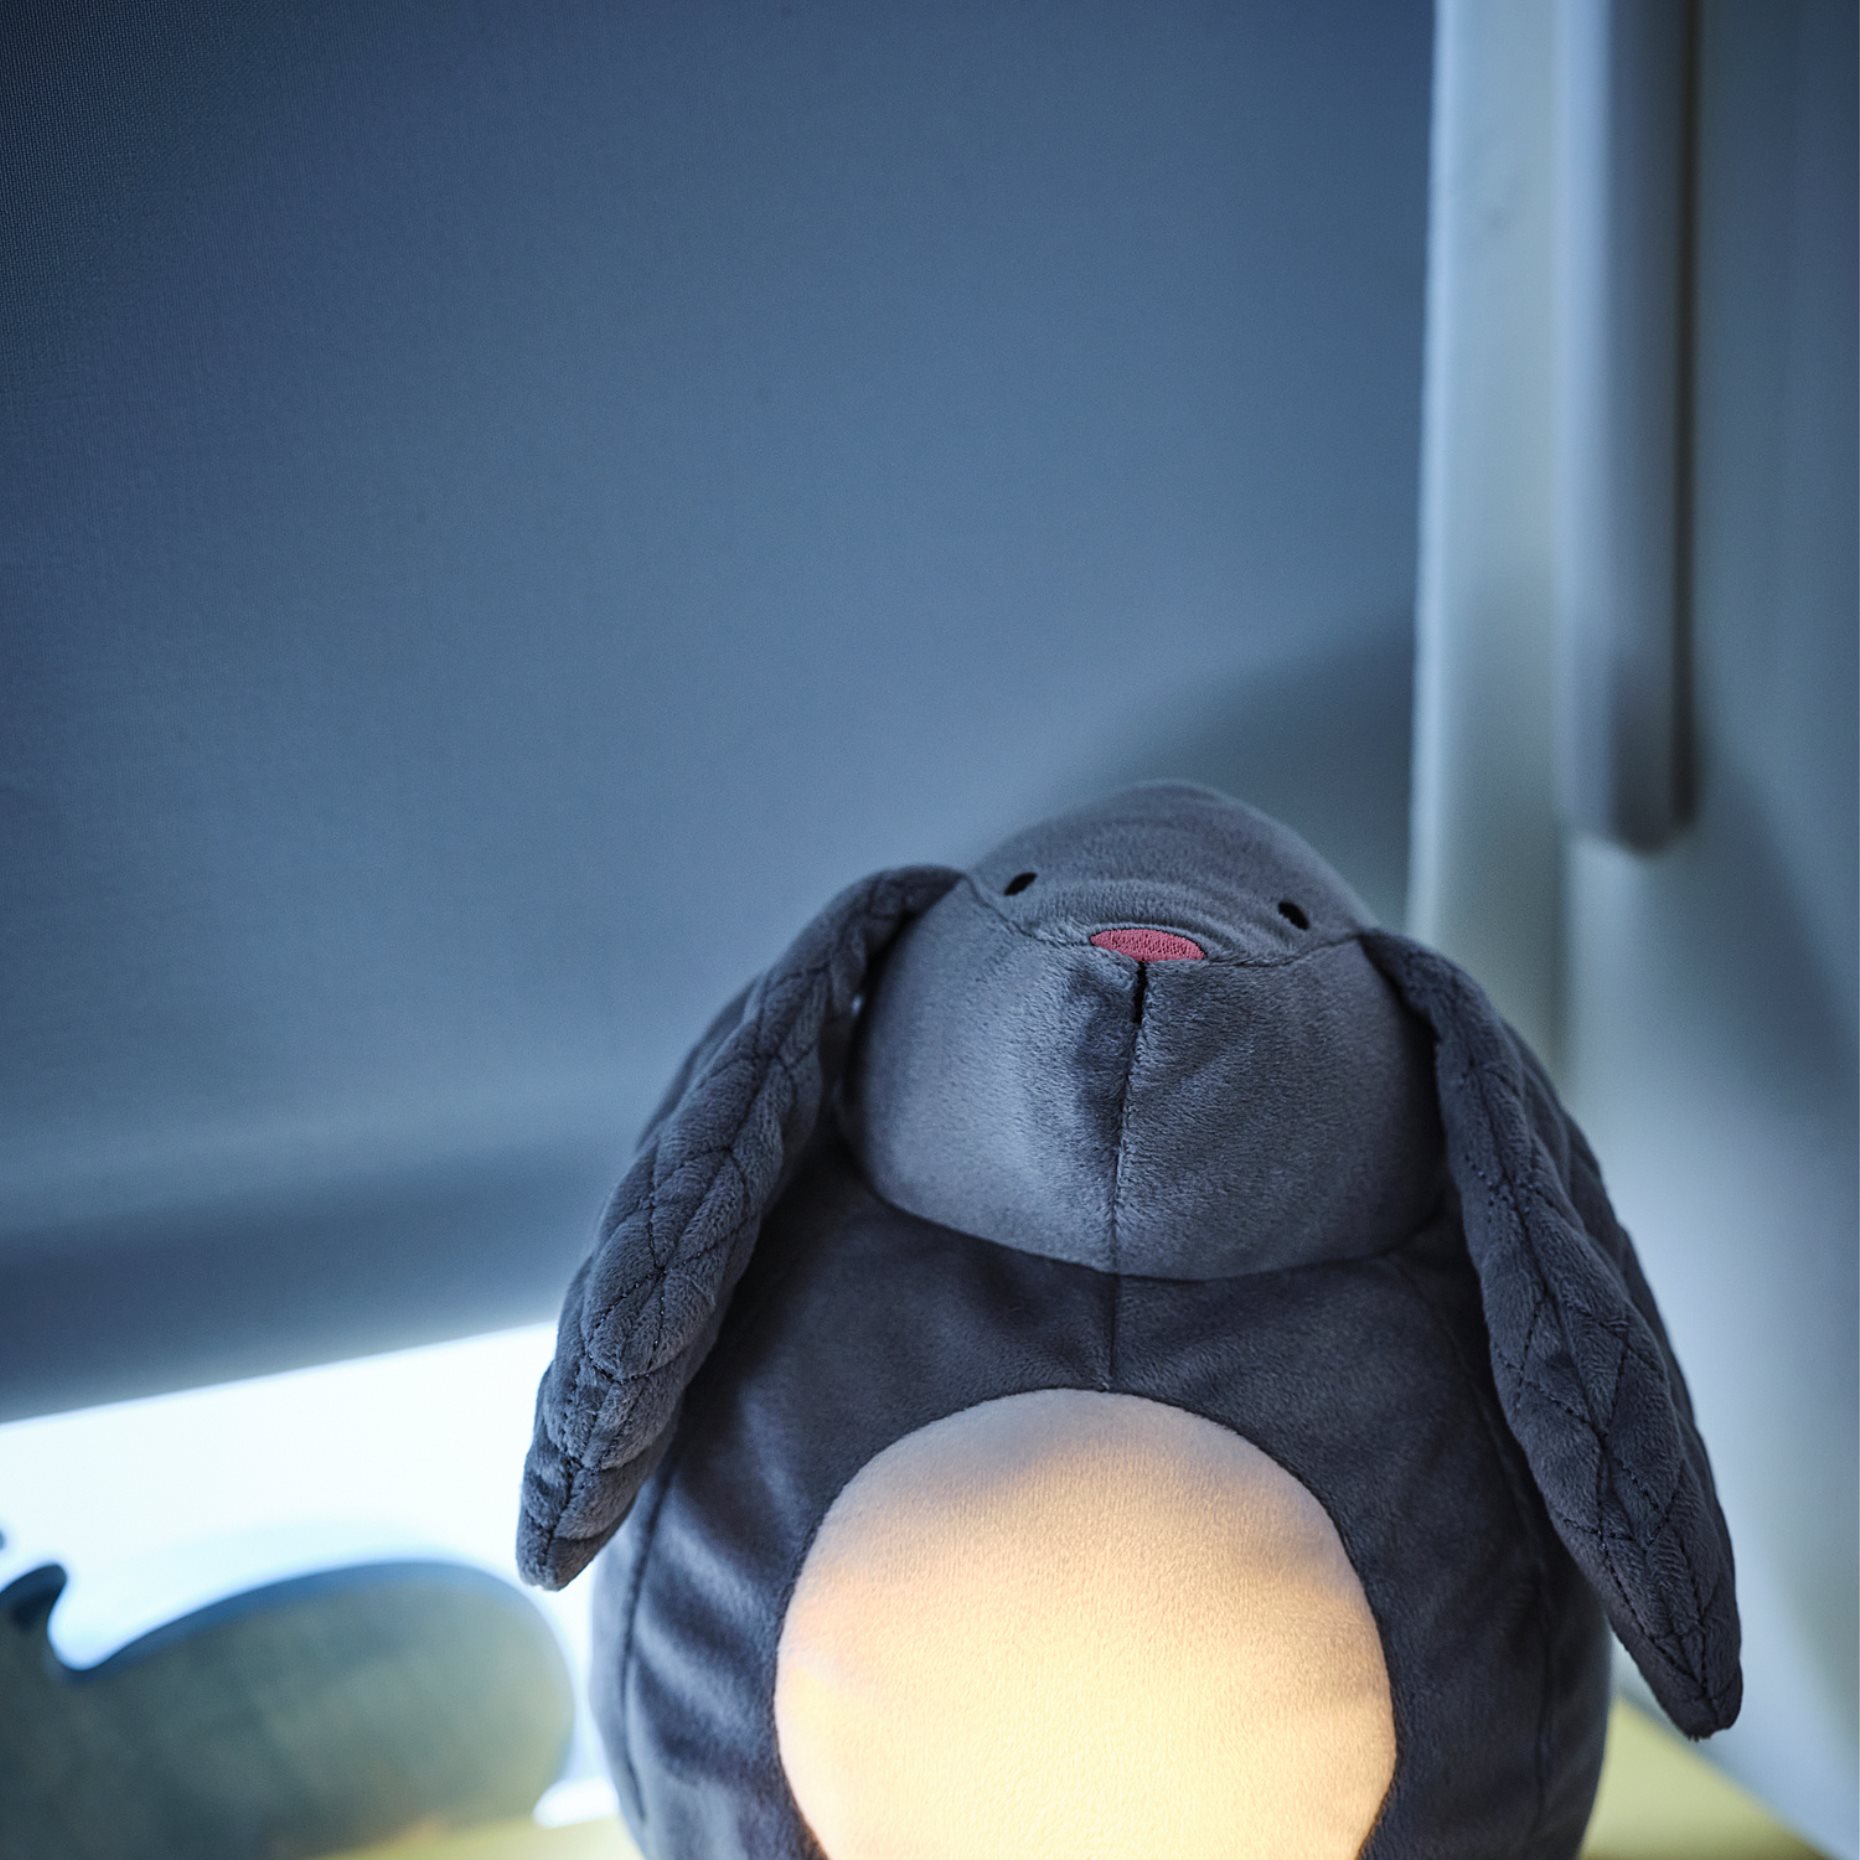 PEKHULT, μαλακό παιχνίδι με φως νύκτας και ενσωματωμένο φωτισμό LED/λειτουργία με μπαταρία, 19 cm, 504.700.03